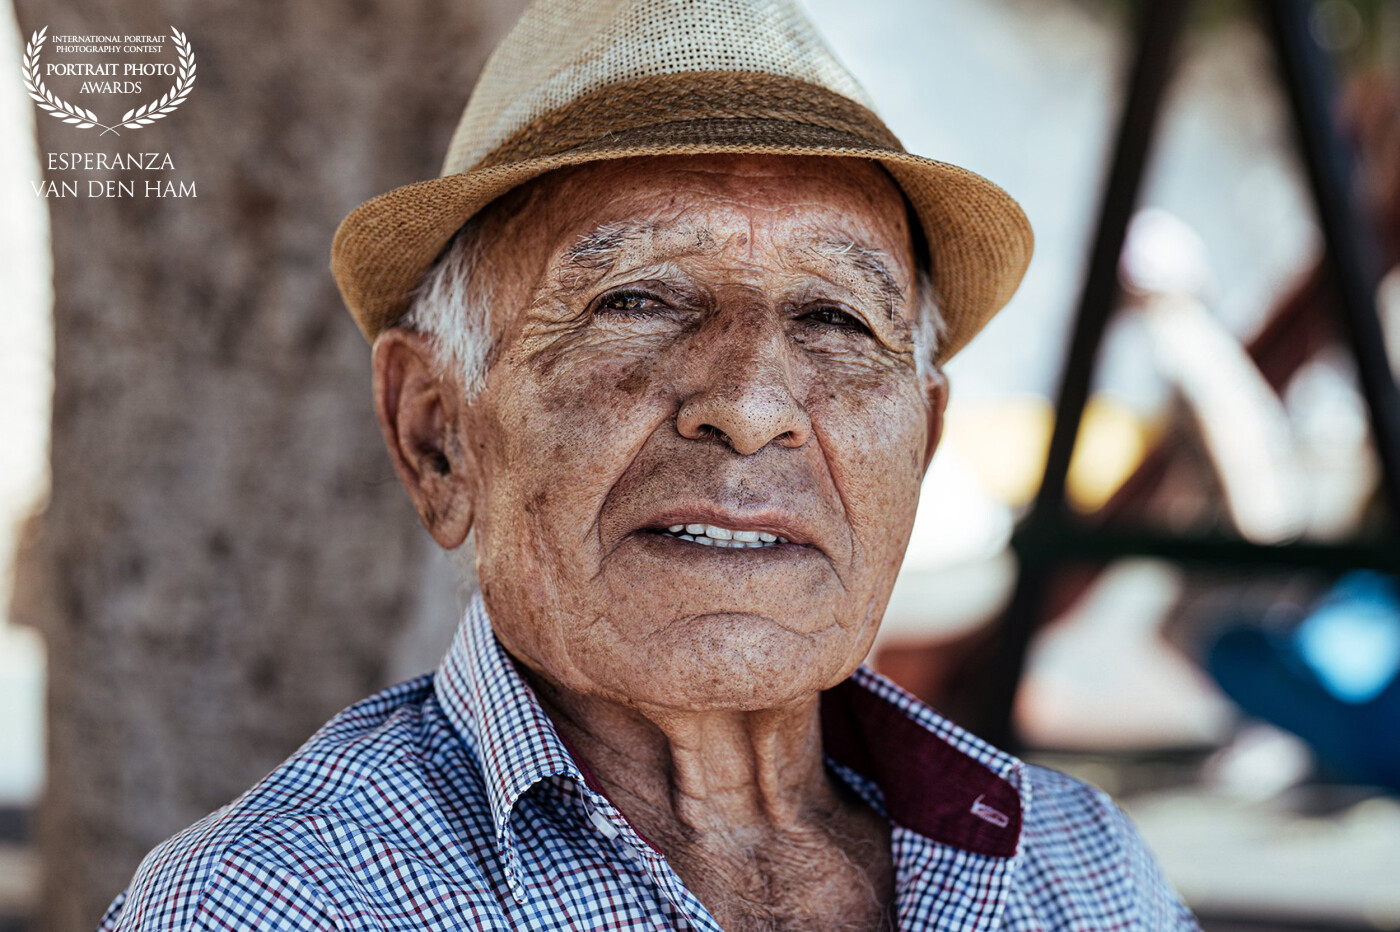 “Love the old souls in Spain”<br />
Created by: iamshootingportraits<br />
www.iamshootingportrait